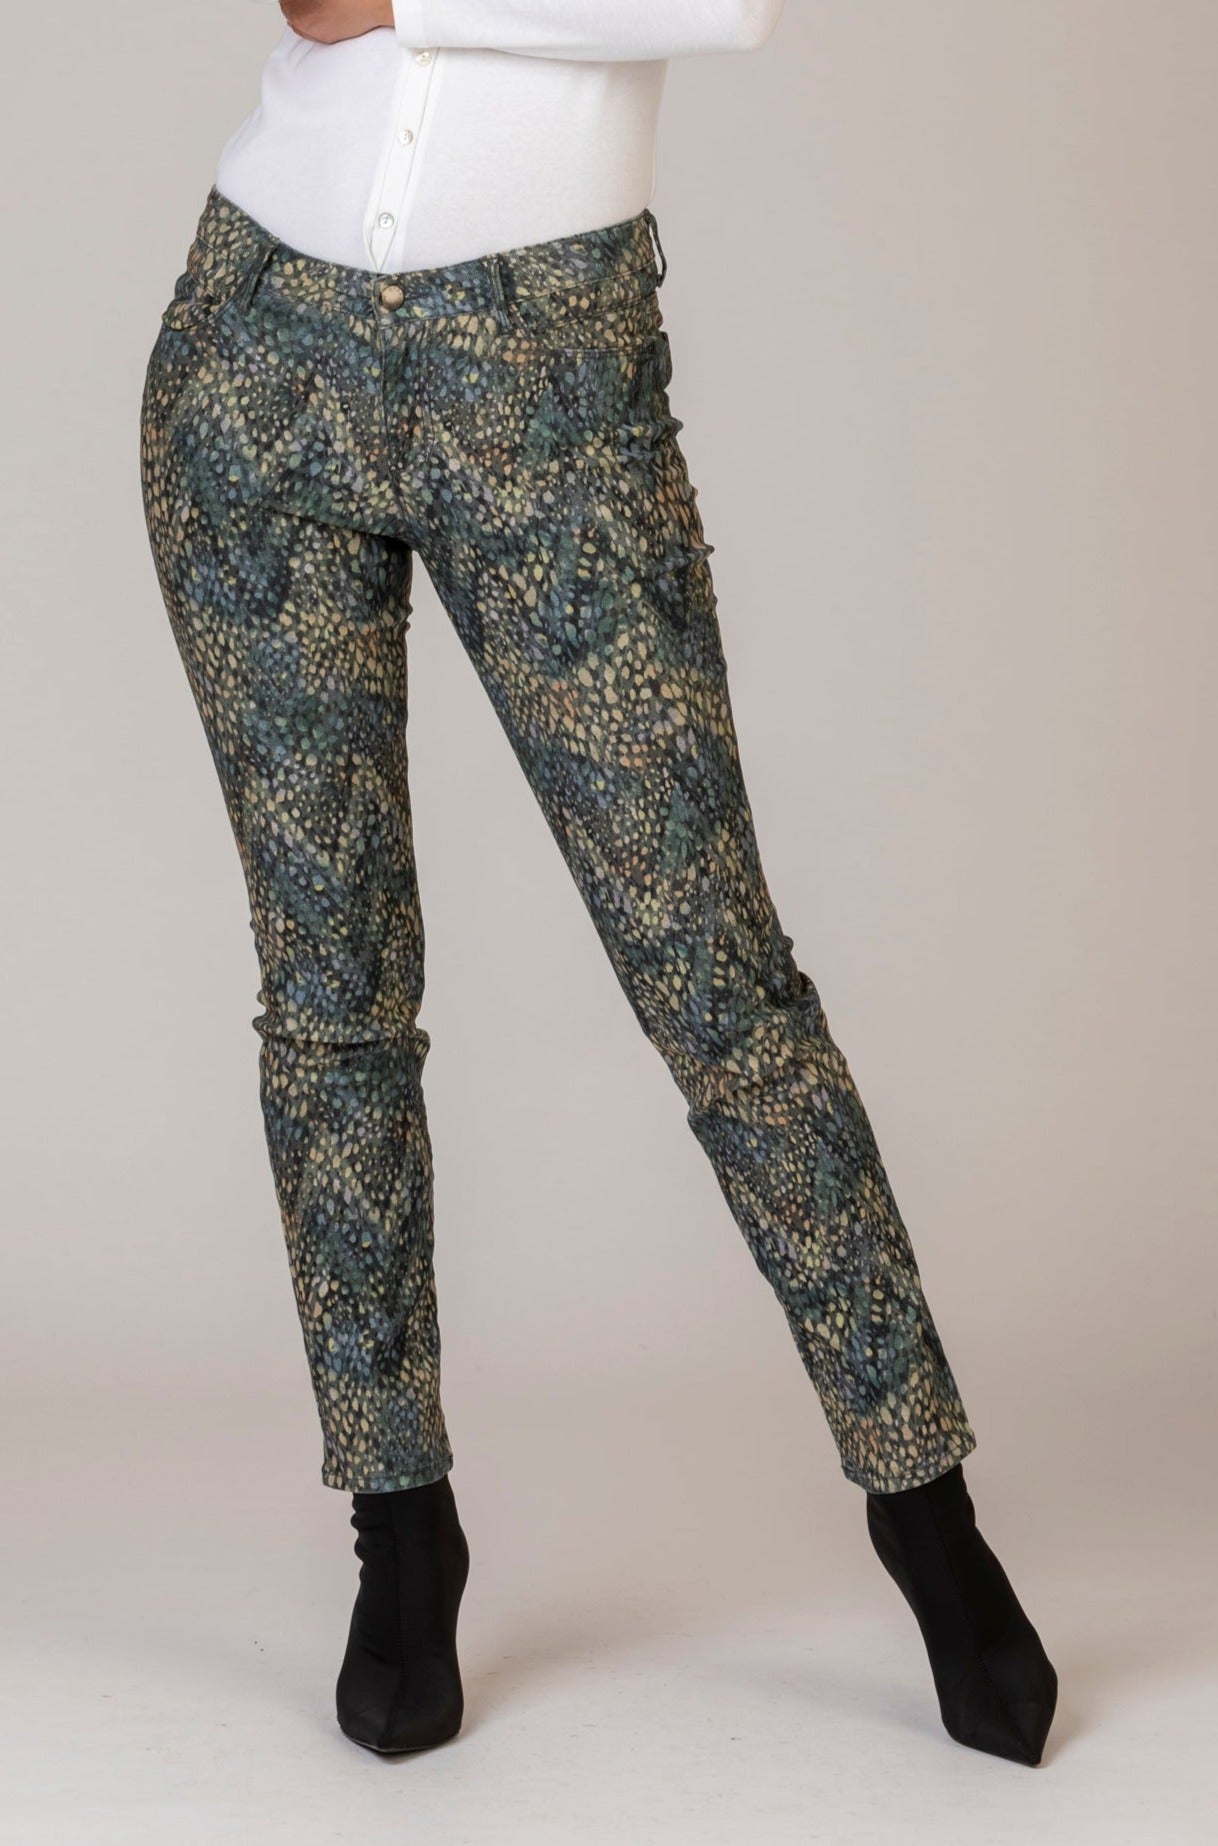 Jeans Shakira Trousers Collection, Brax Sarah Shakira & Thomson |